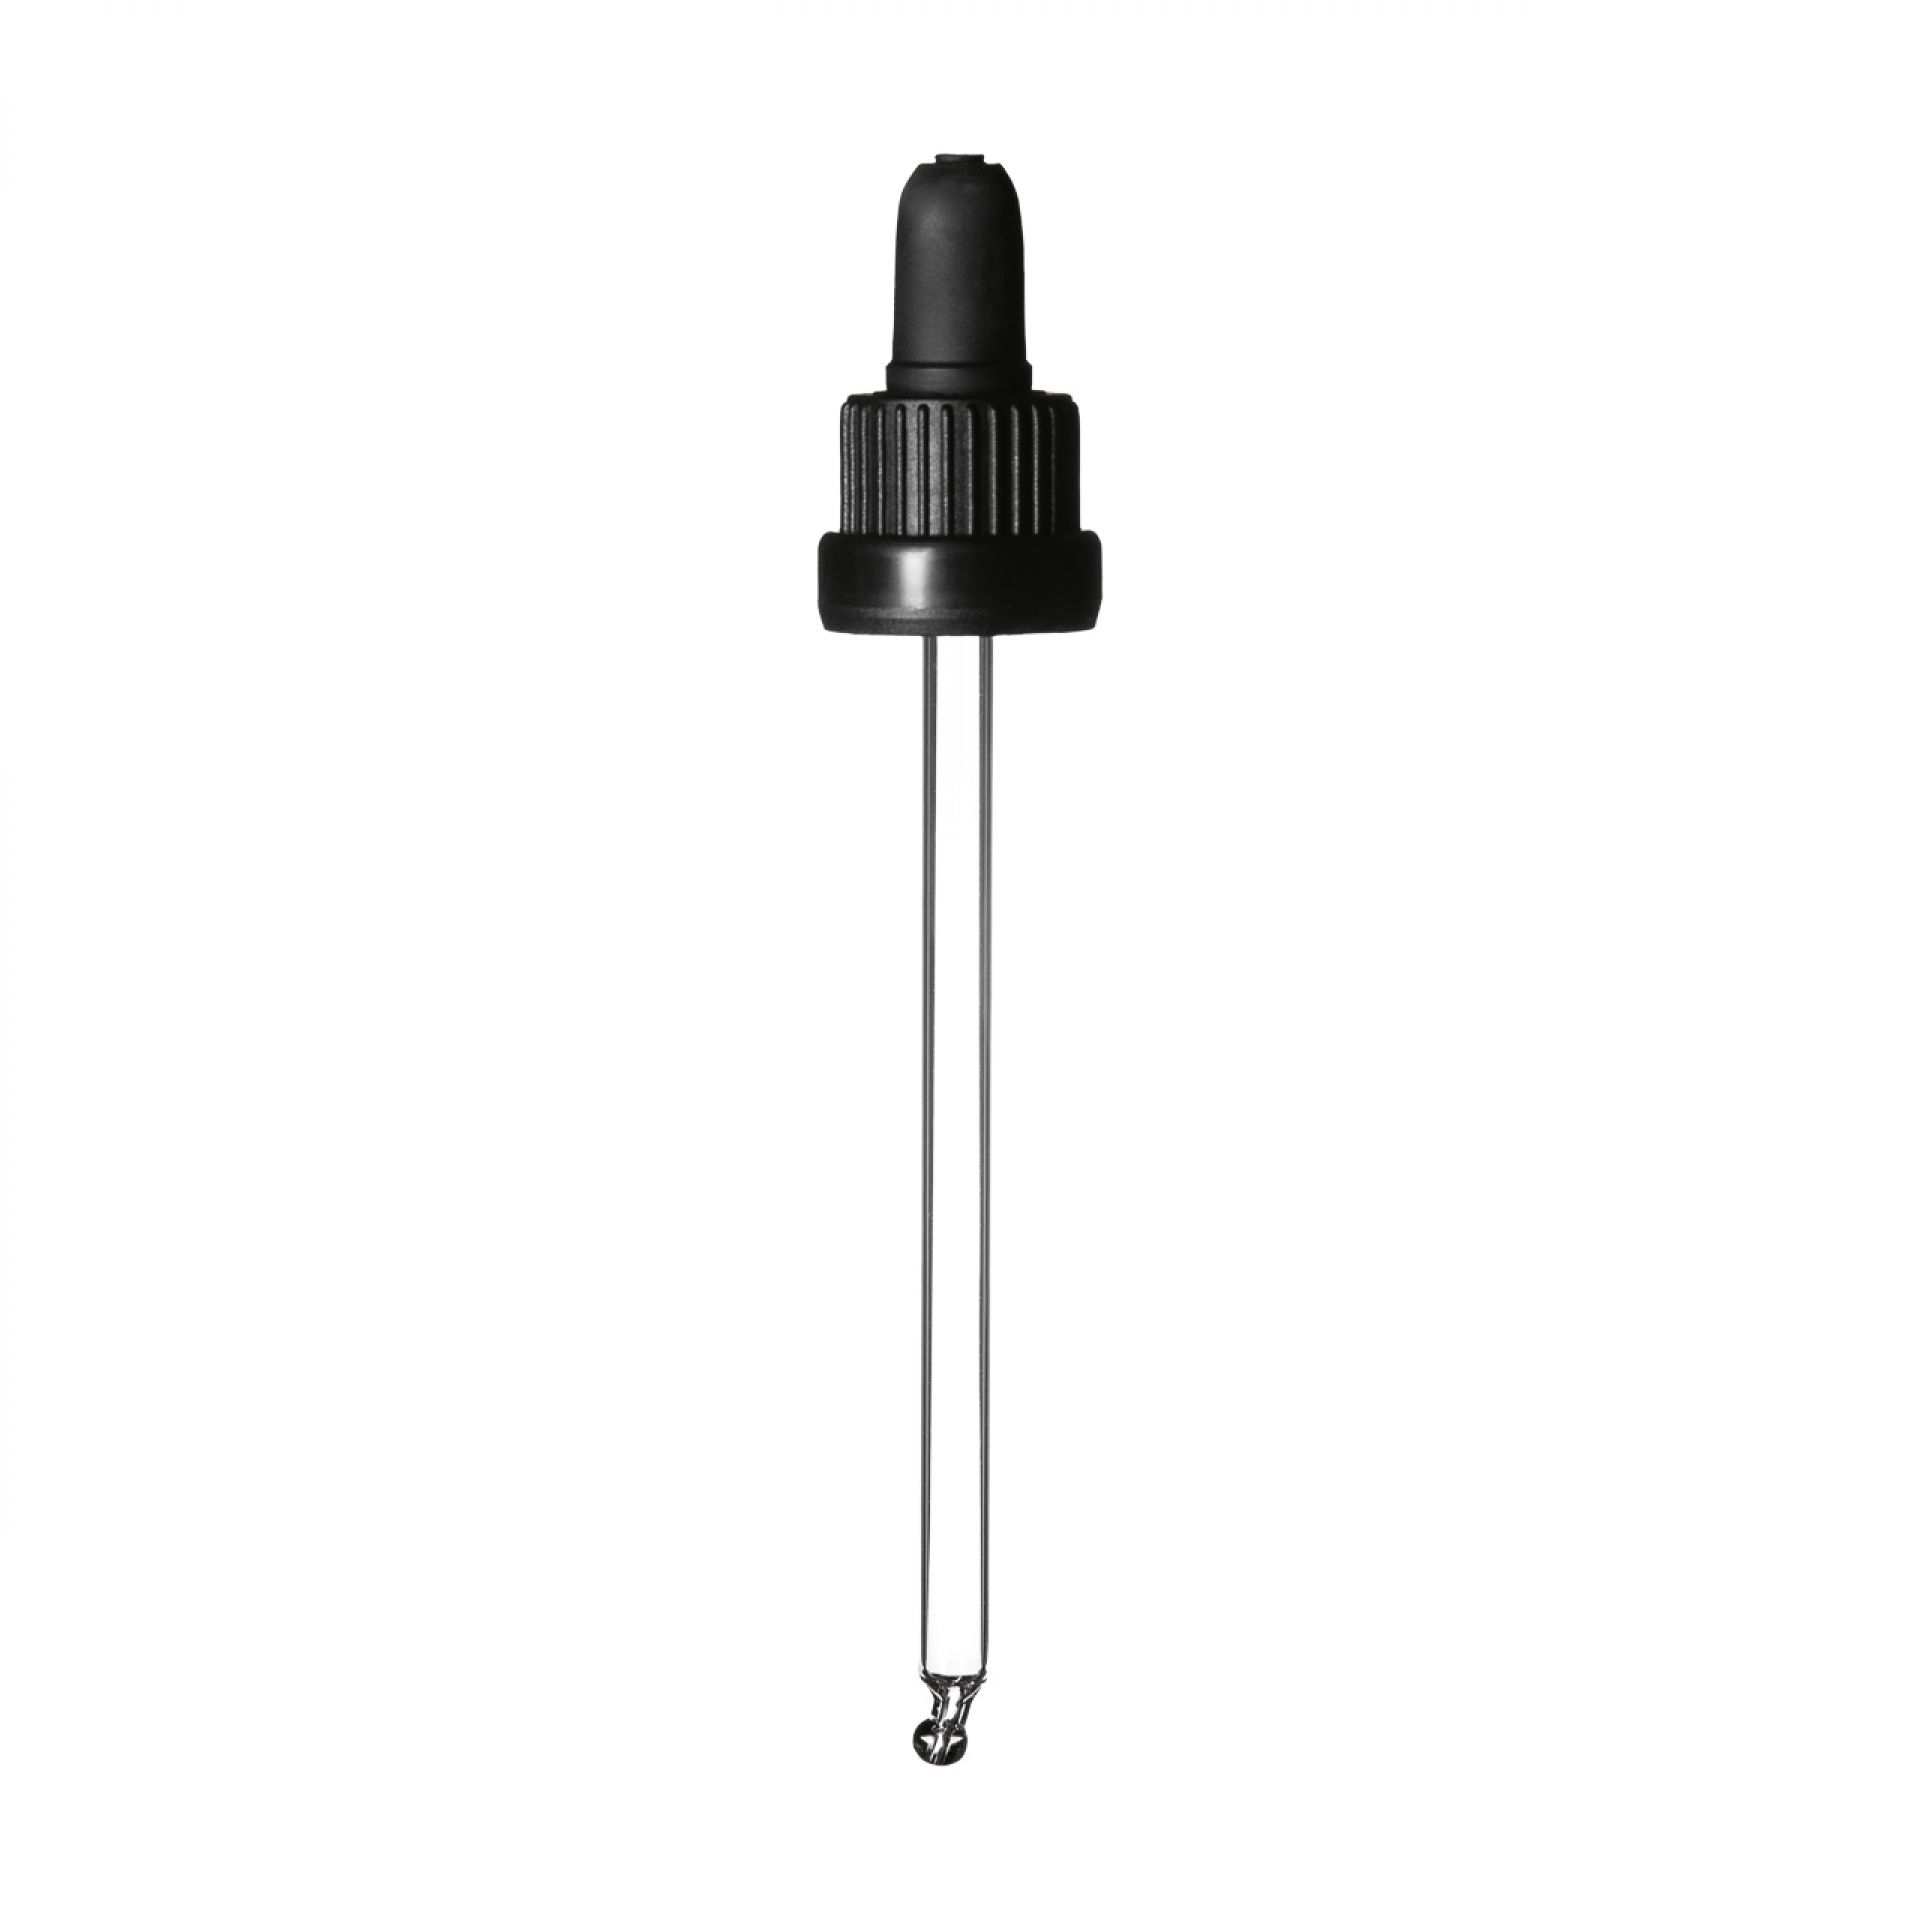 Pipette tamper evident DIN18, III, black, ribbed, bulb TPE, dose 0.7ml, bent ball tip (Orion 100)